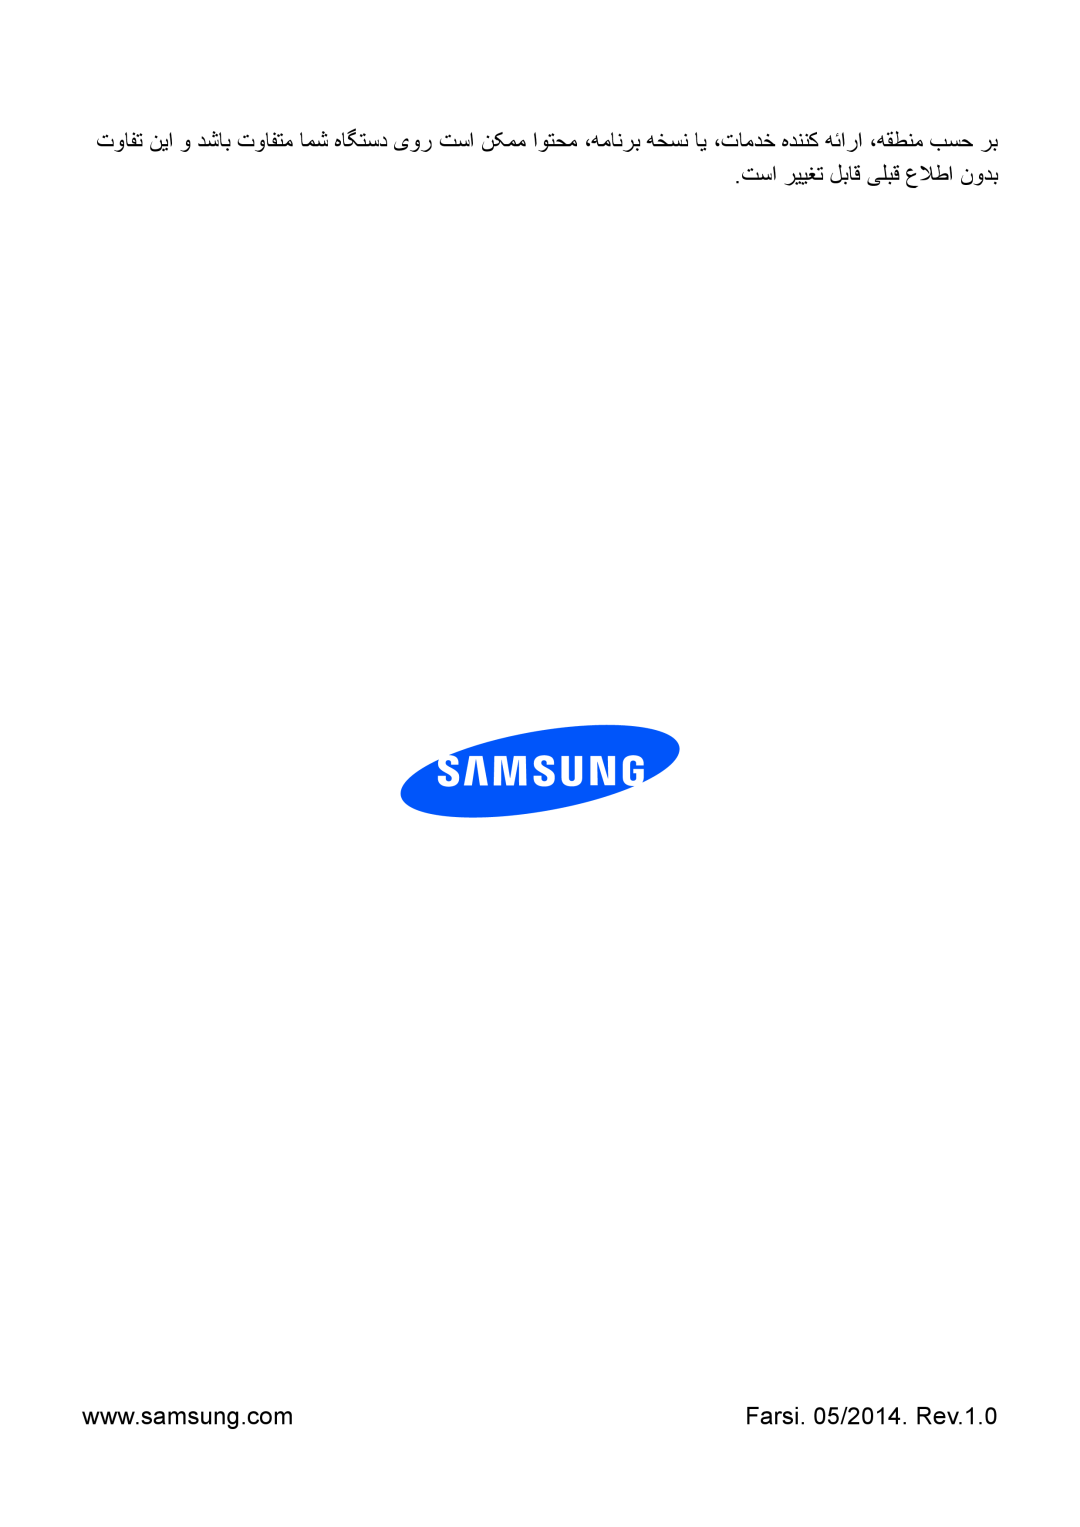 Samsung GT-I9300RWILYS, GT-I9300MBIPAK, GT-I9300RWIKSA manual تسا رییغت لباق یلبق علاطا نودب, Farsi. 05/2014. Rev.1.0 